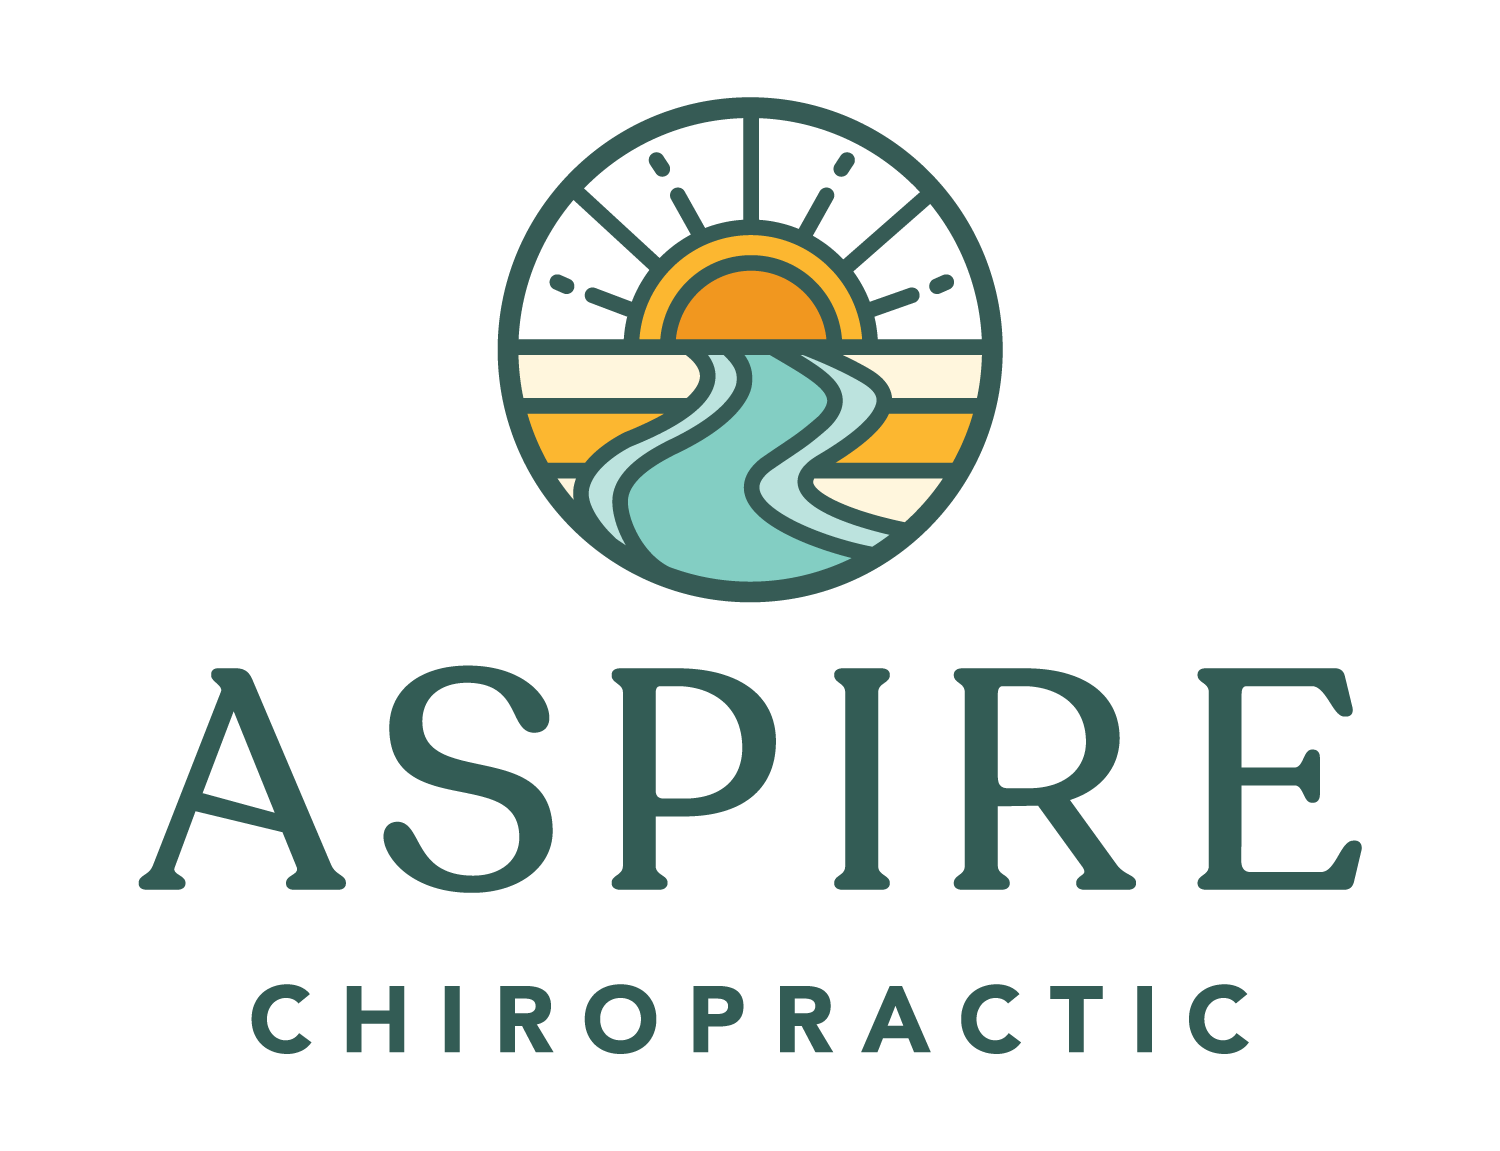 Aspire Chiropractic